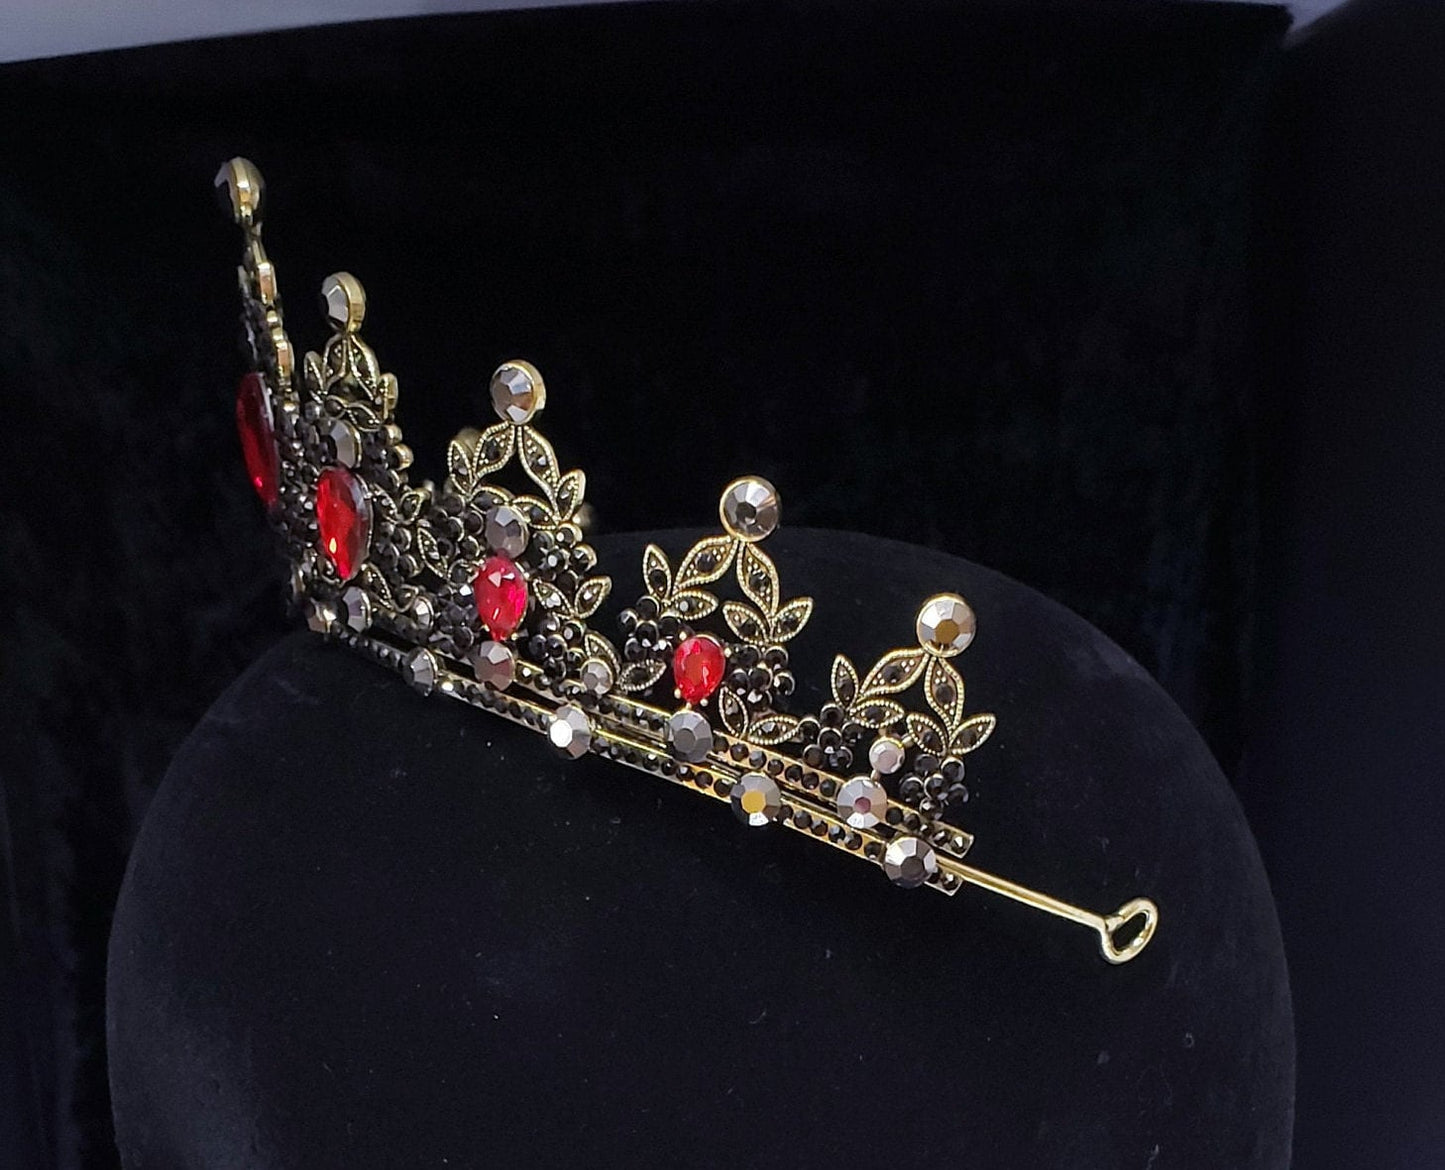 Ruby Red Vintage Baroque Tiara Dark Black Crown Goth Evil Queen diadem headress jewelry bridal Halloween cosplay Wedding pageant royalty